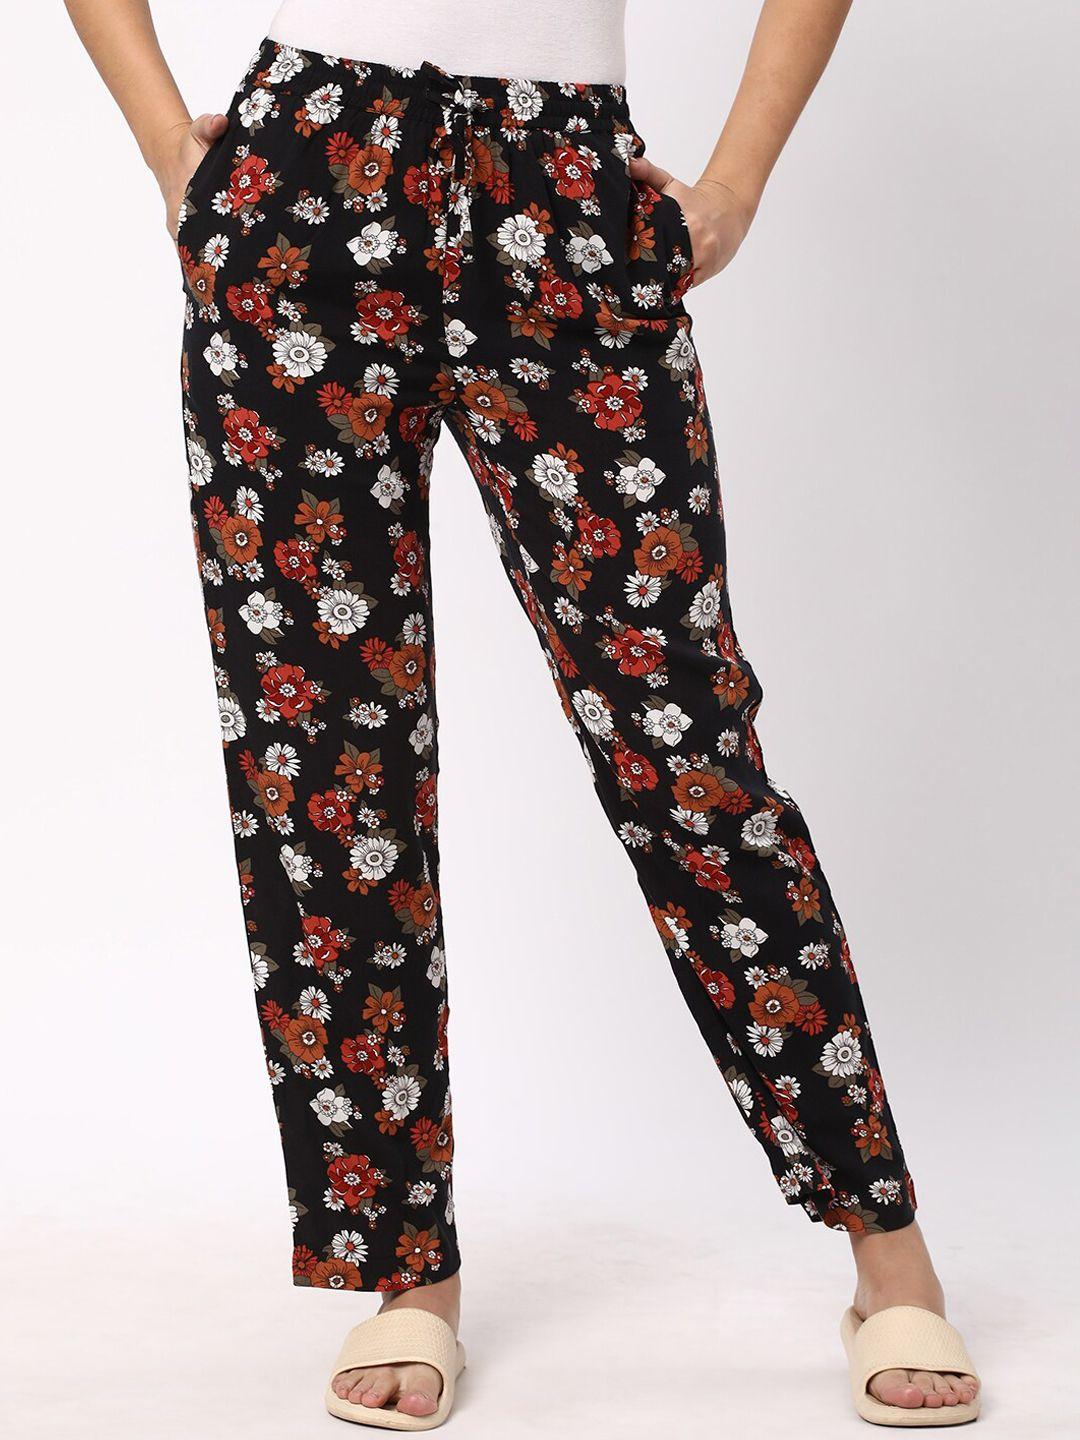 r&b women floral printed mid rise lounge pants